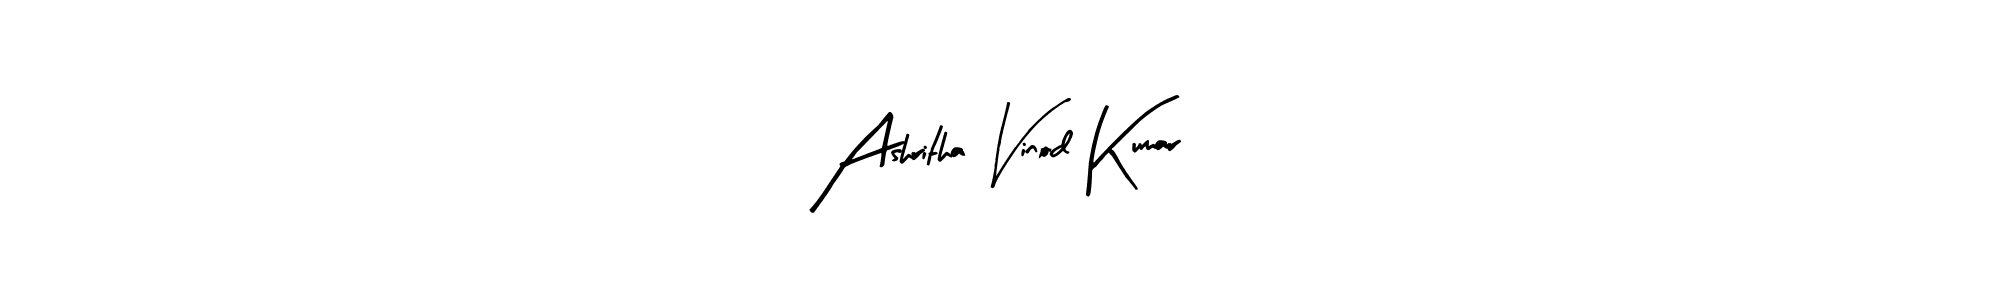 How to Draw Ashritha Vinod Kumar signature style? Arty Signature is a latest design signature styles for name Ashritha Vinod Kumar. Ashritha Vinod Kumar signature style 8 images and pictures png